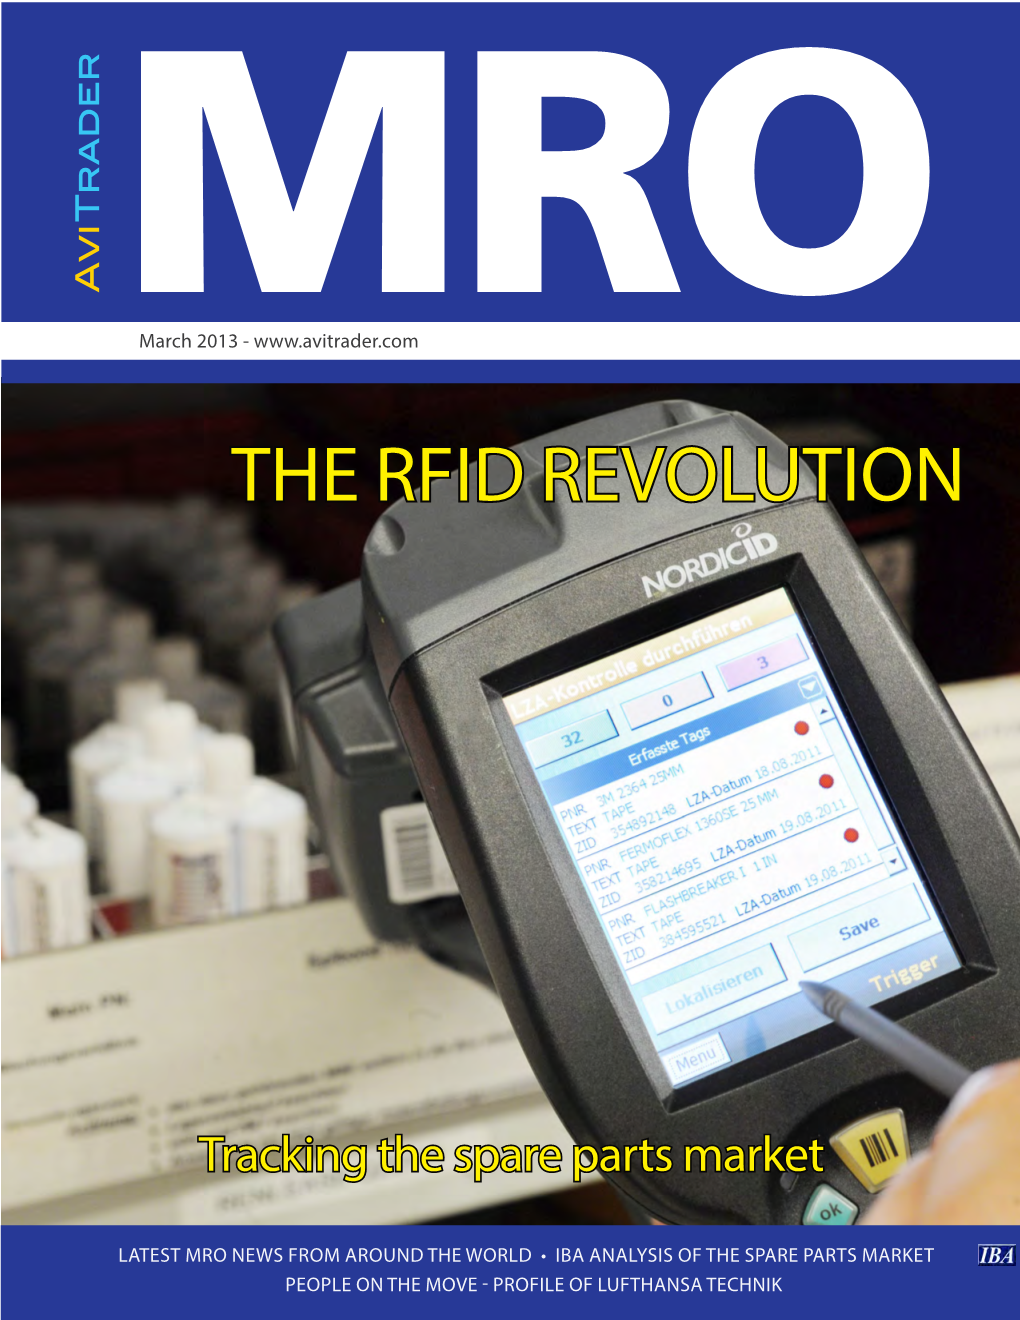 Avitrader Monthly MRO Magazine